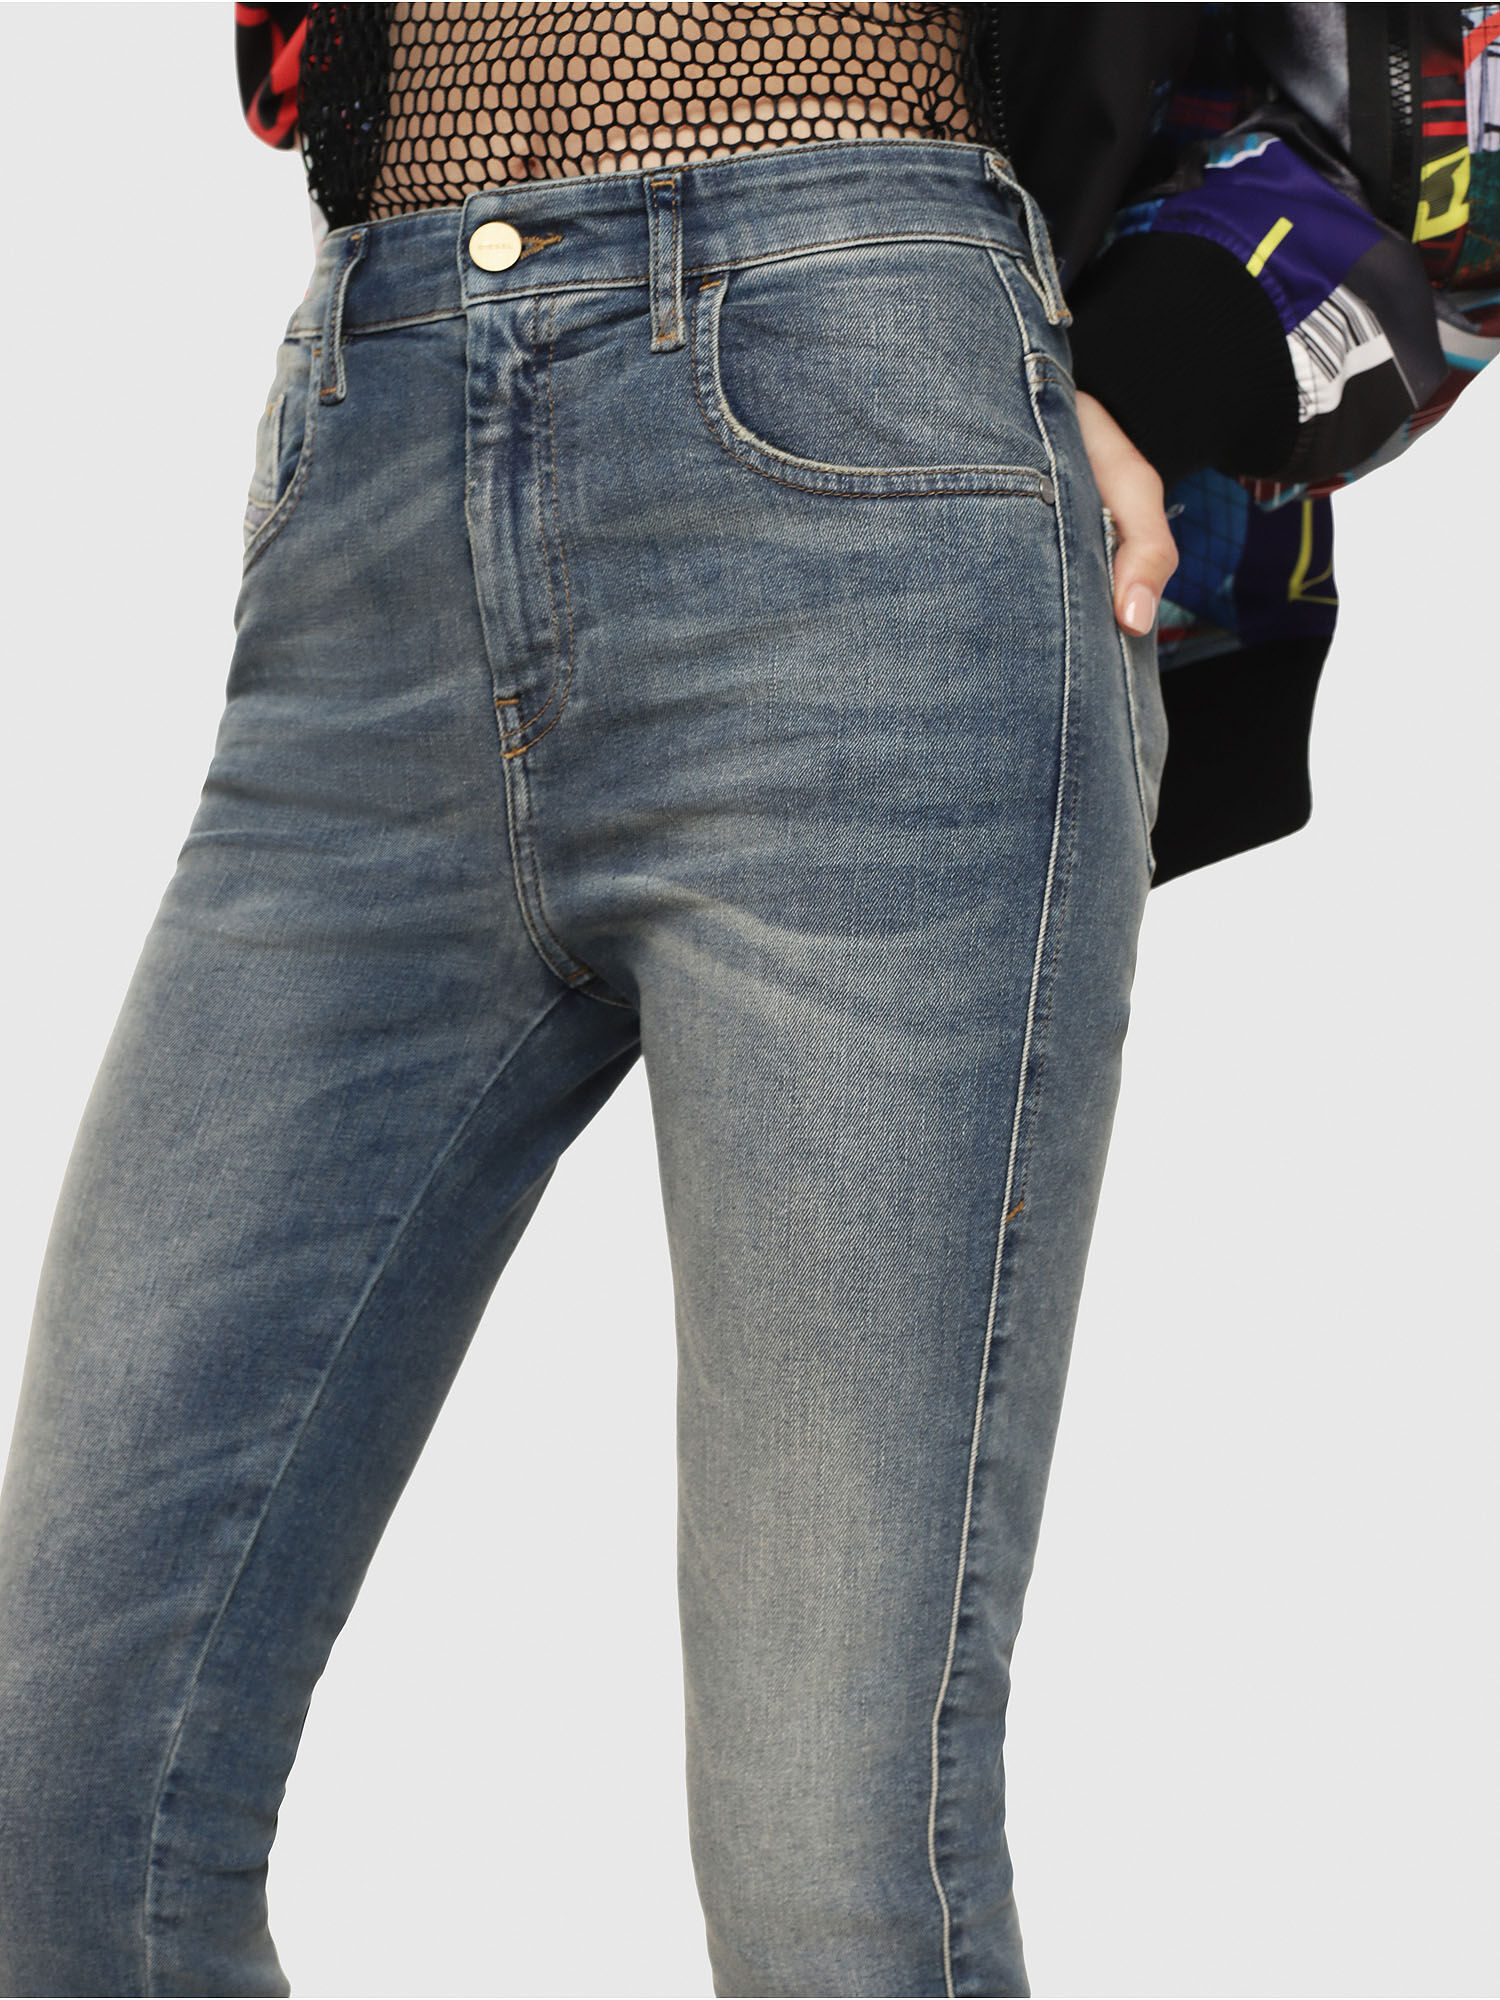 New Mens Boys Super Skinny Stretch Sale Xmas Blue Denim Jeans Gift Waist Sizes